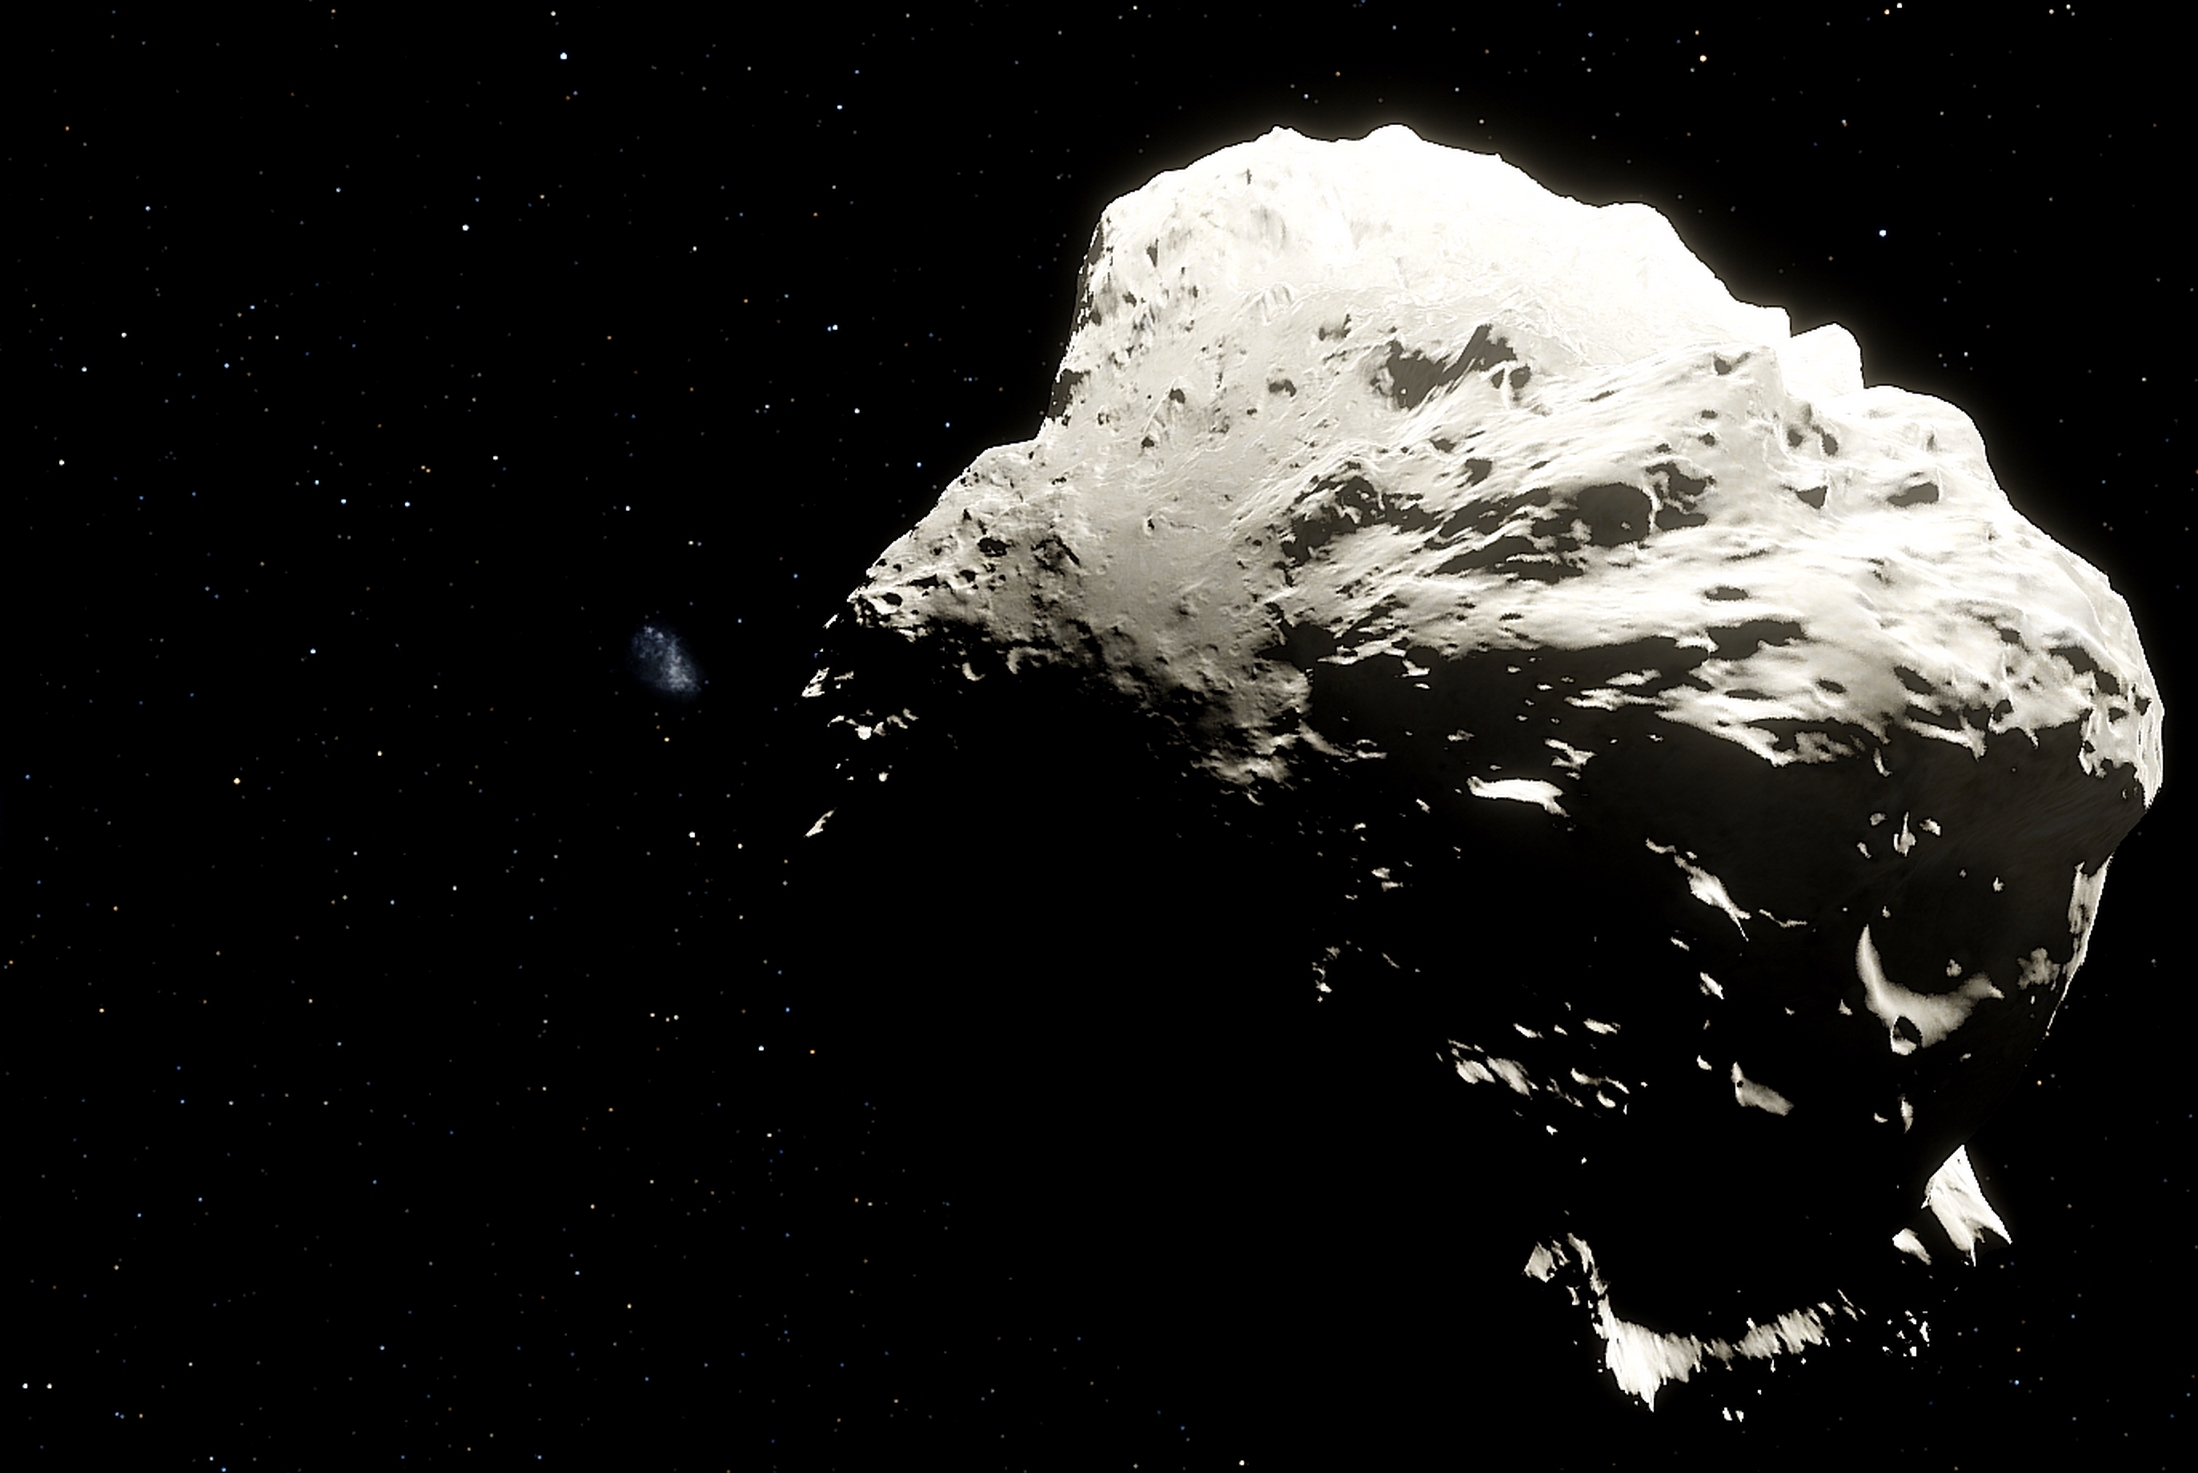 Watch this near-Earth asteroid briefly streak across tonight's sky 